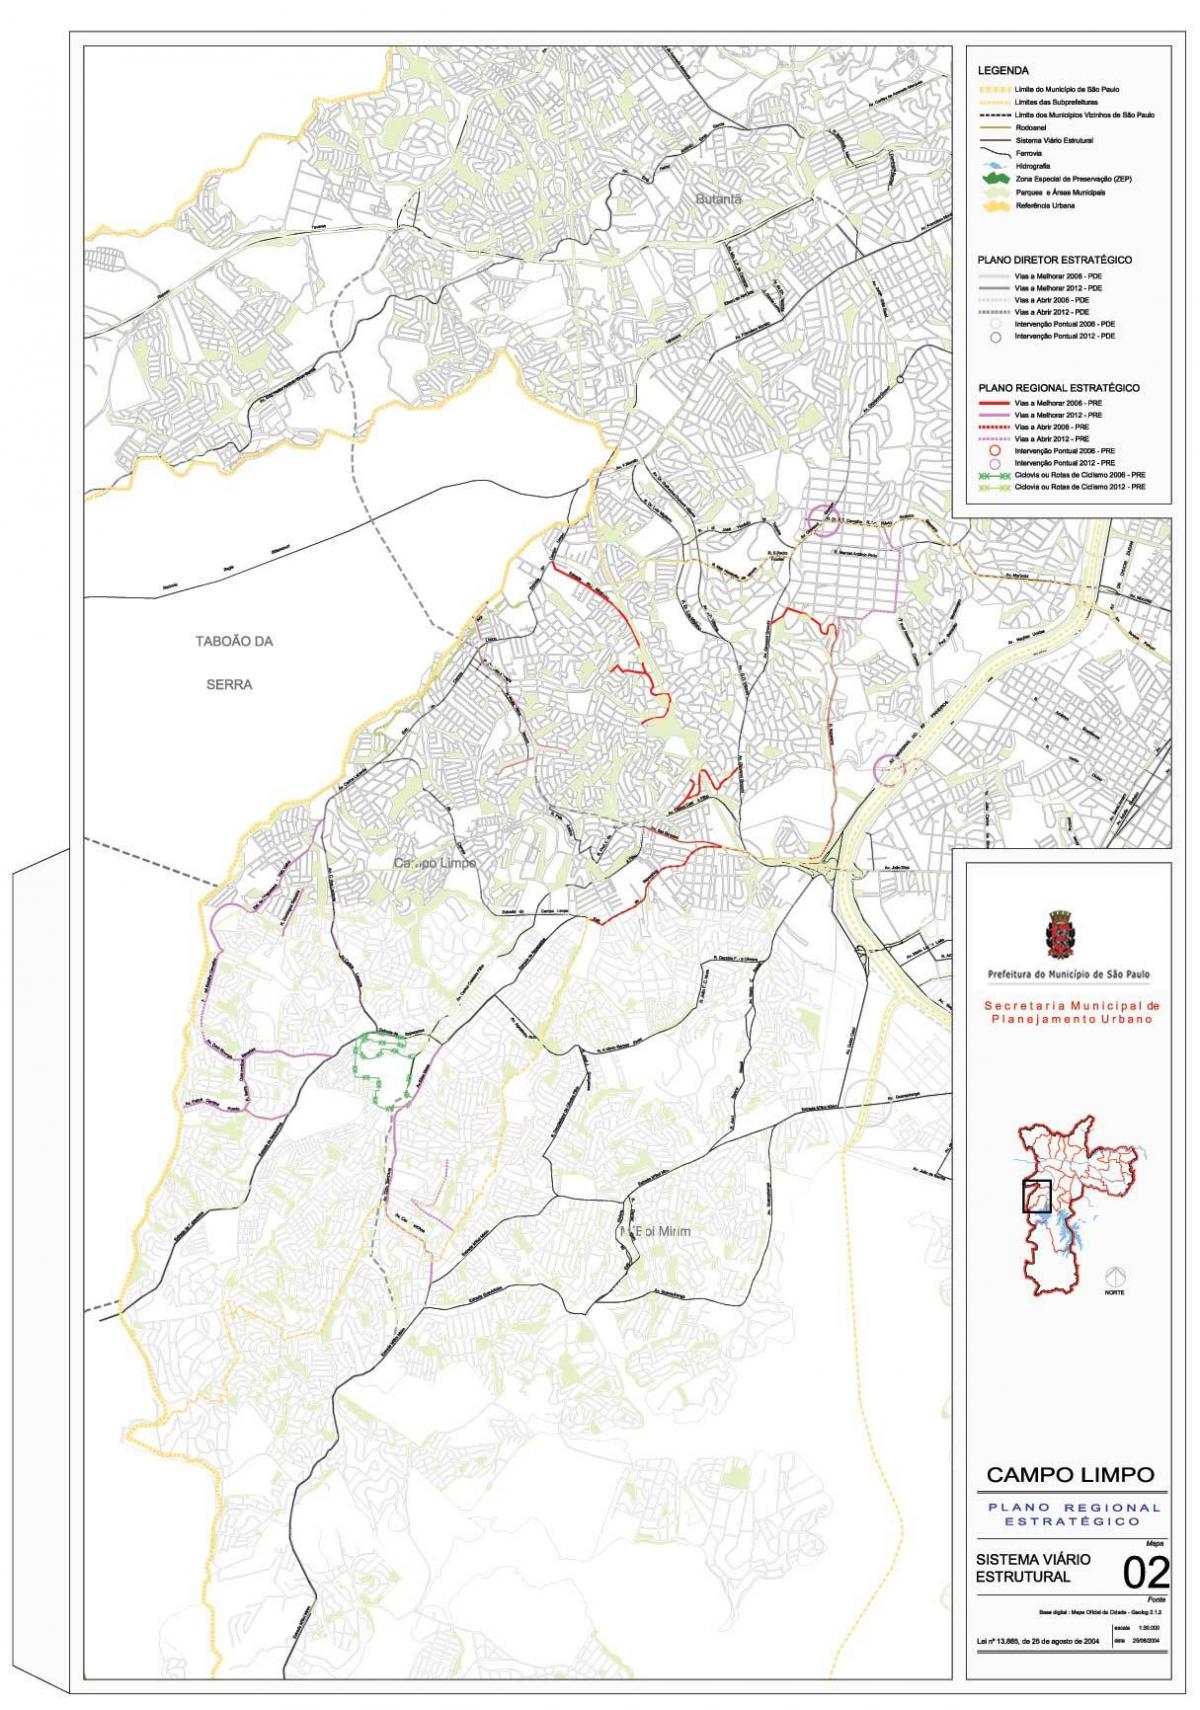 Mapa ng Campo Limpo São Paulo - Kalsada